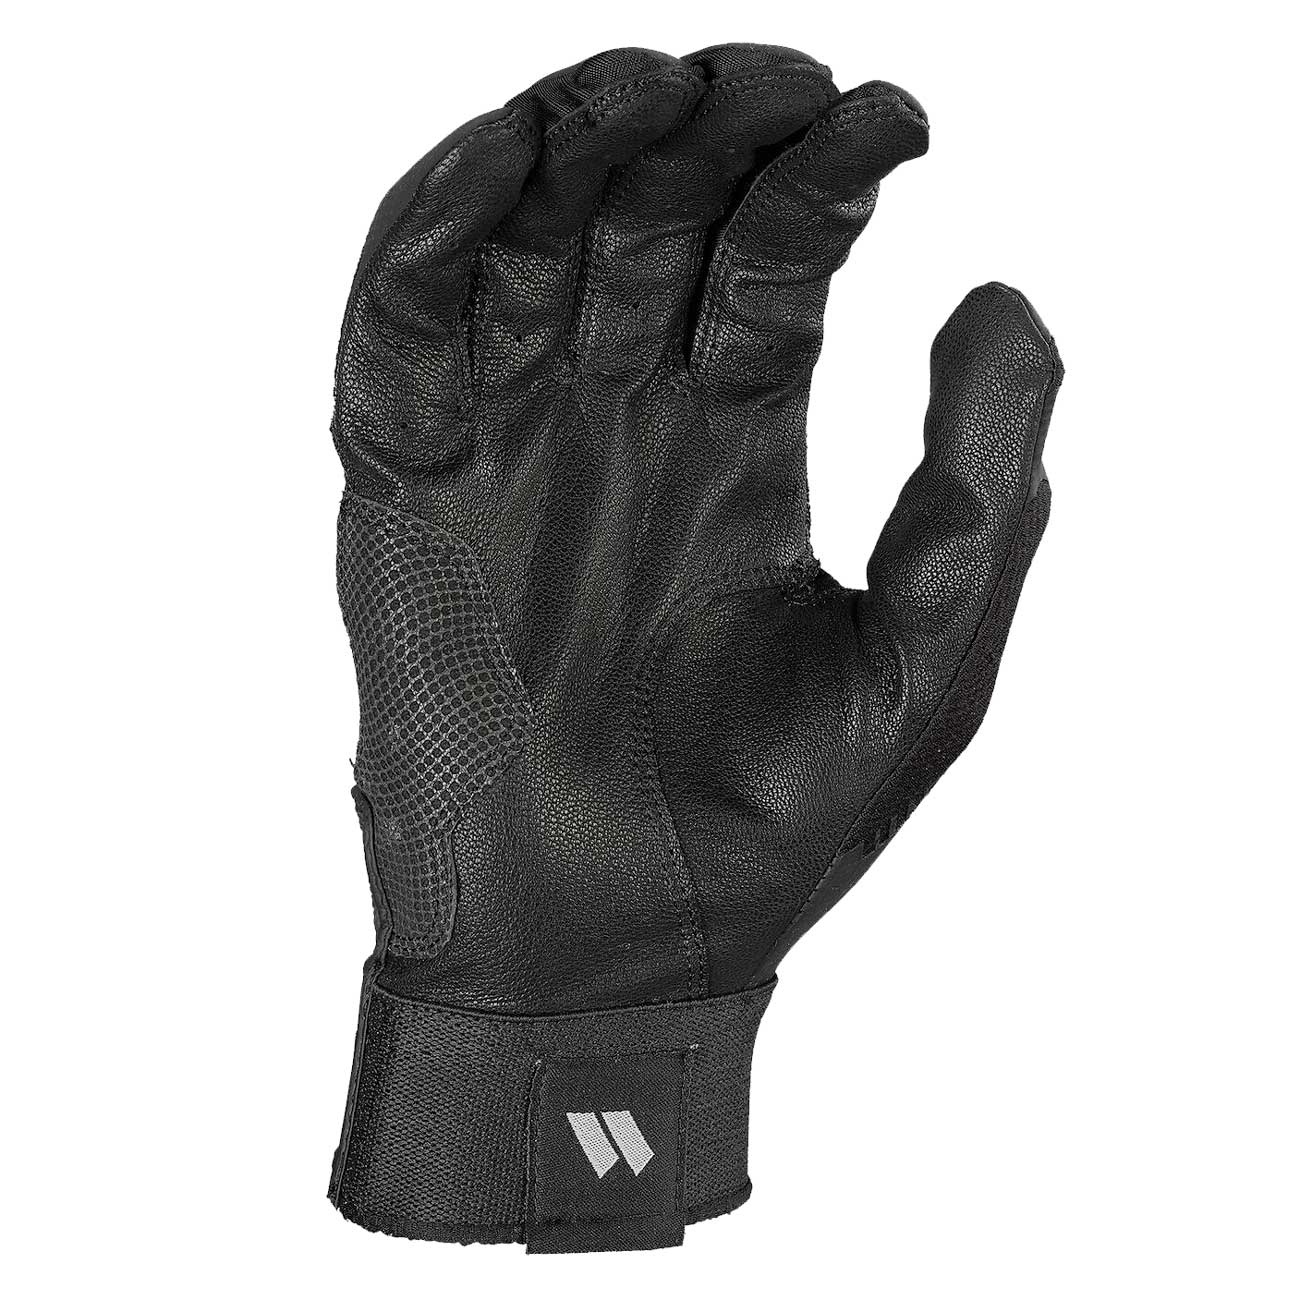 Worth Pro Slo-Pitch Batting Gloves Adult - Black